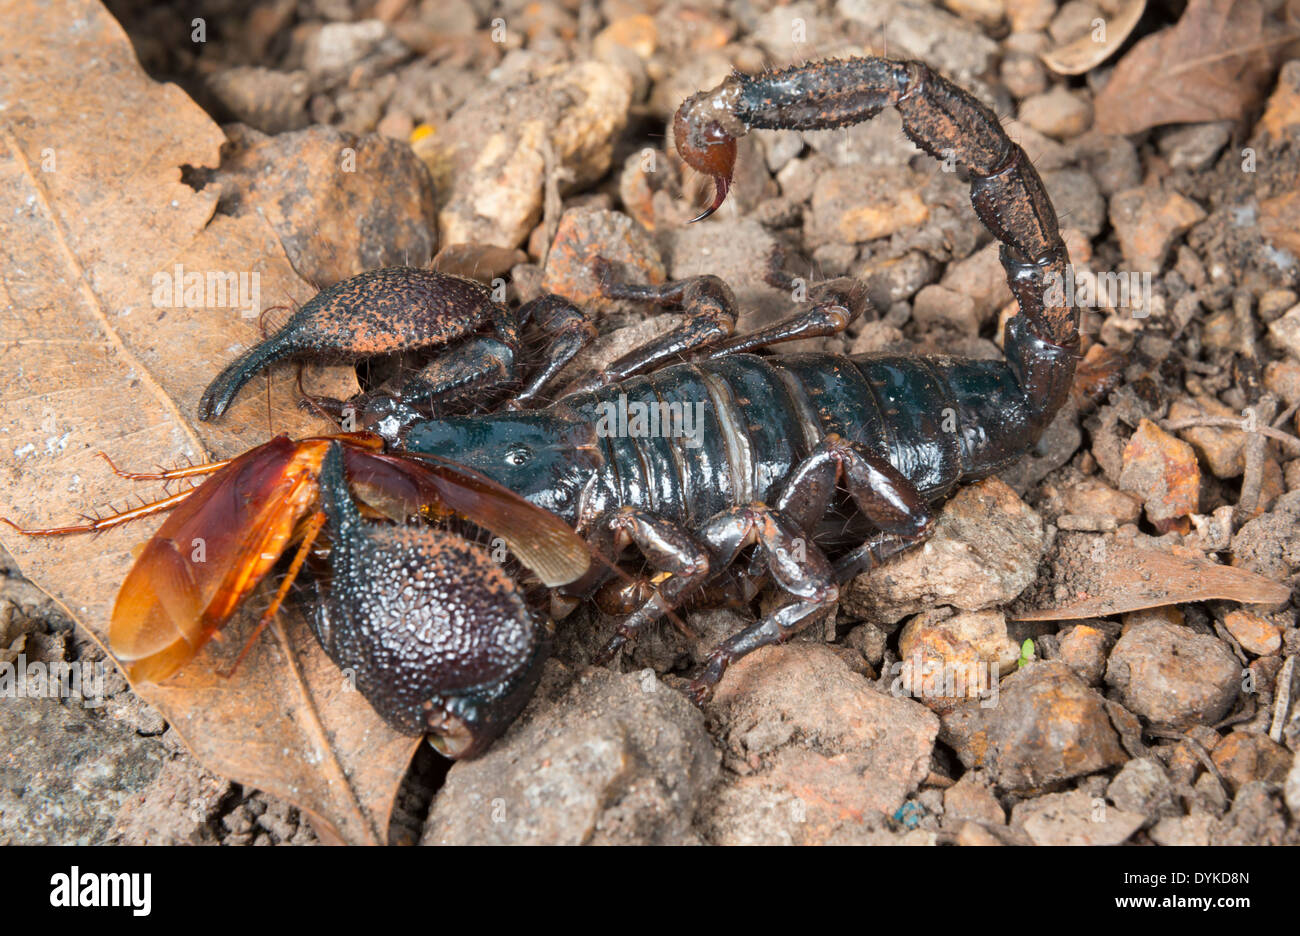 Emperor scorpion (Pandinus imperator) eating cockroach, Ghana. Stock Photo